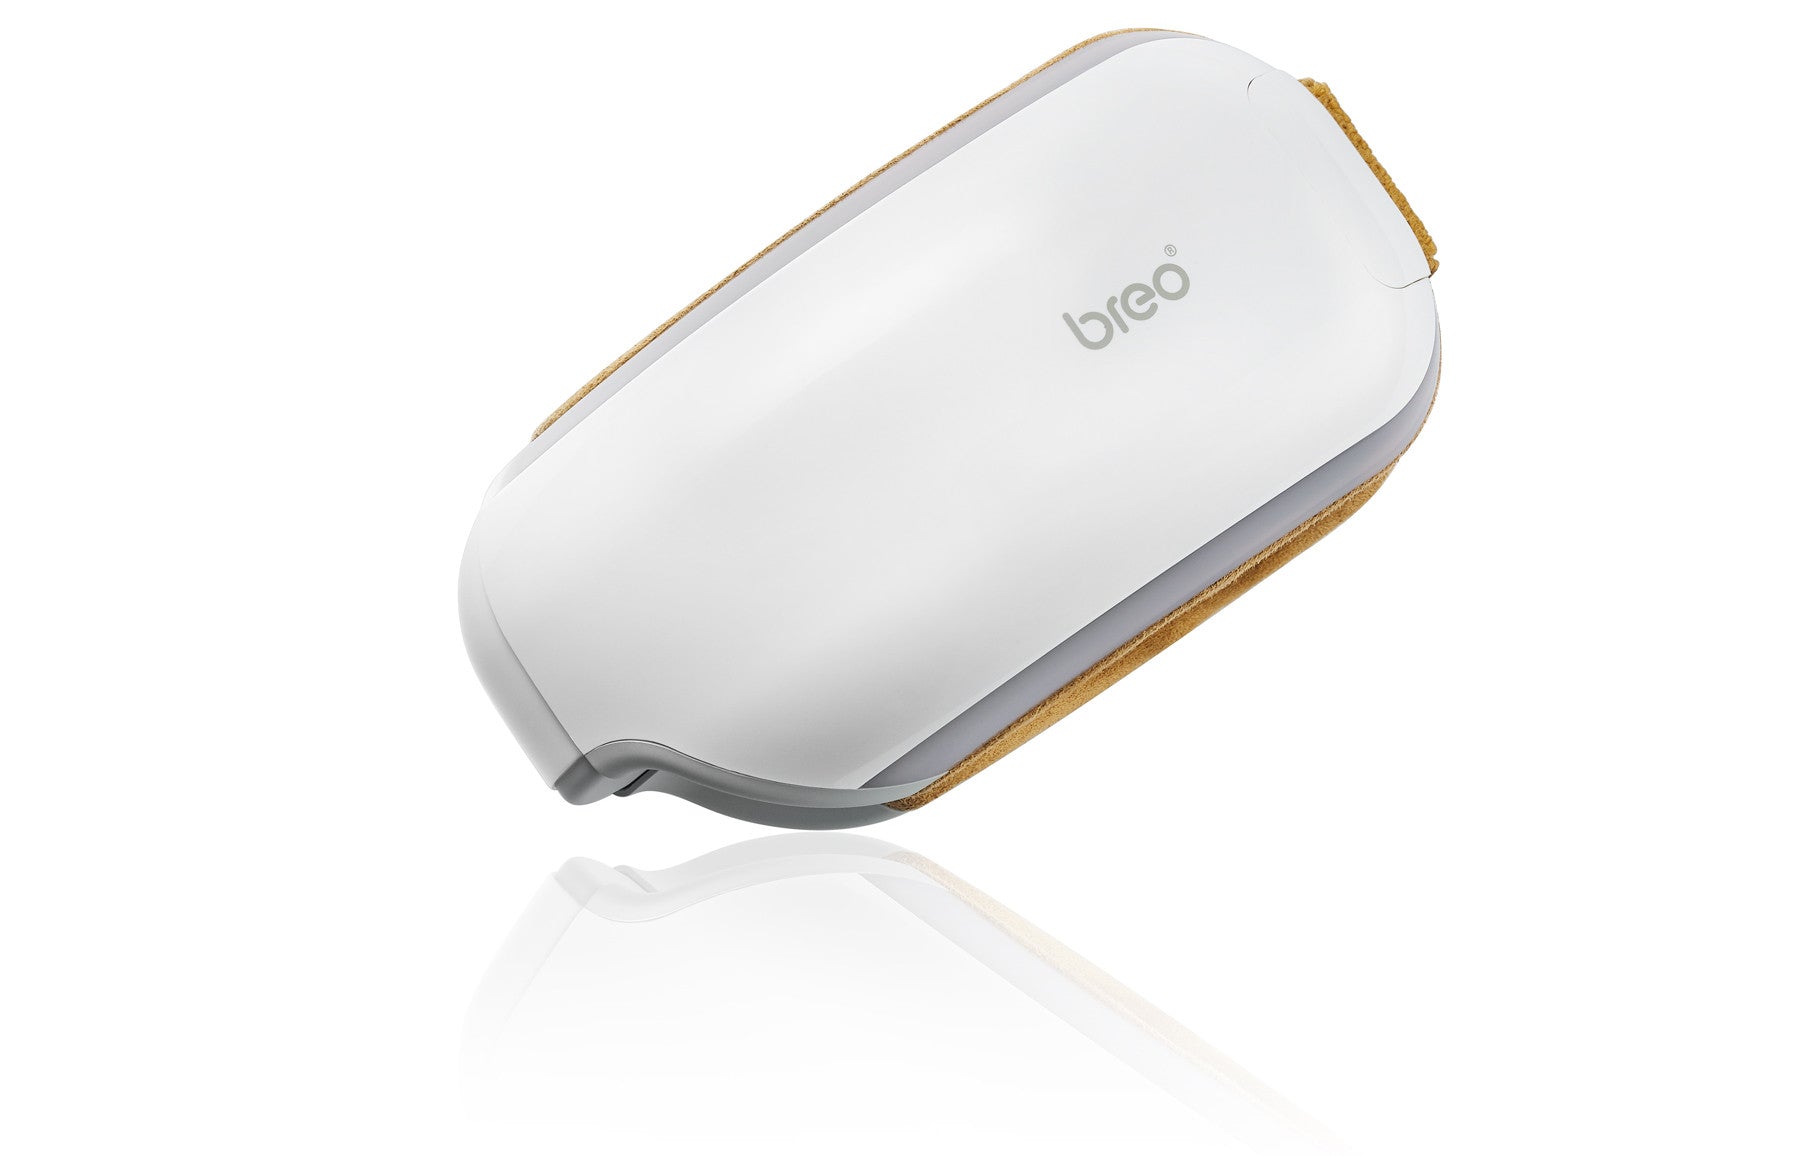 Breo iSee4 Wireless Digital Eye Massager - OBM Distribution, Inc.